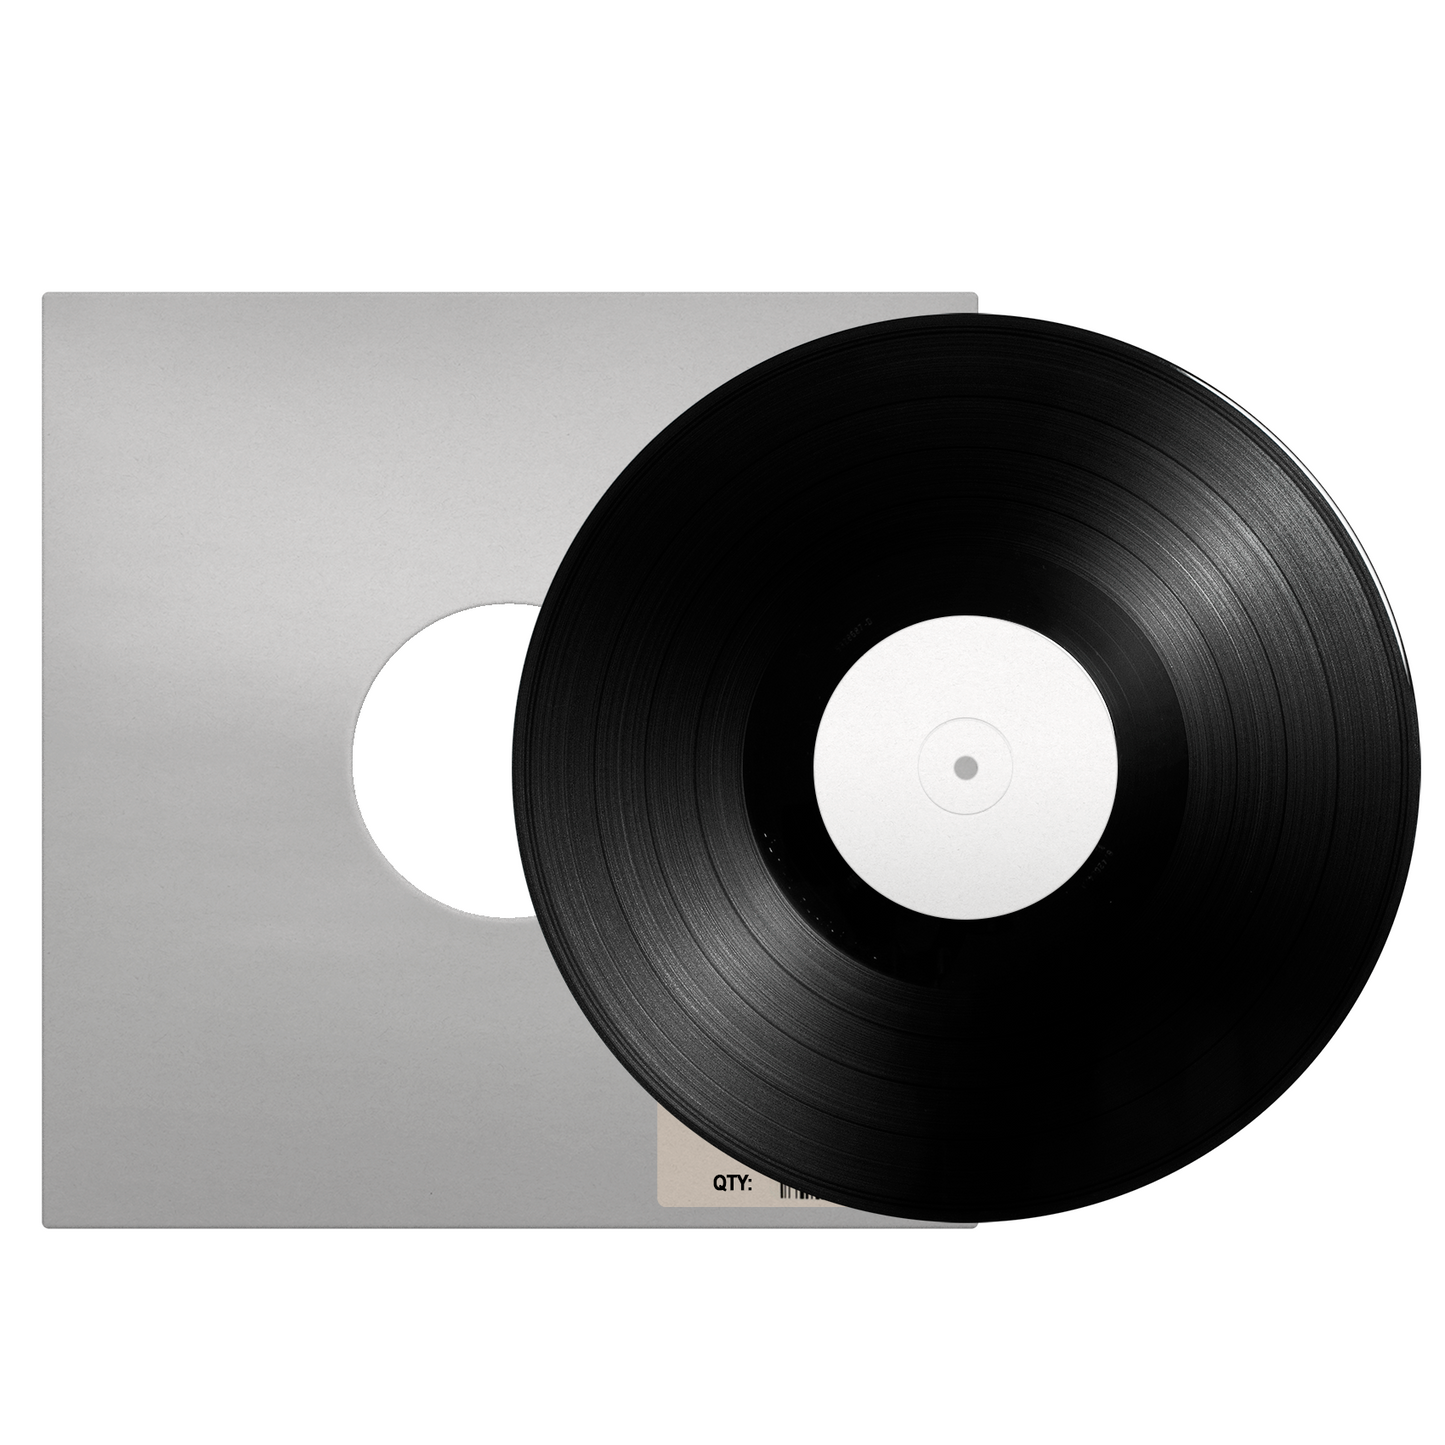 ✞☯Future Otaku✞☯ - "Future Idols" Test Pressing Vinyl